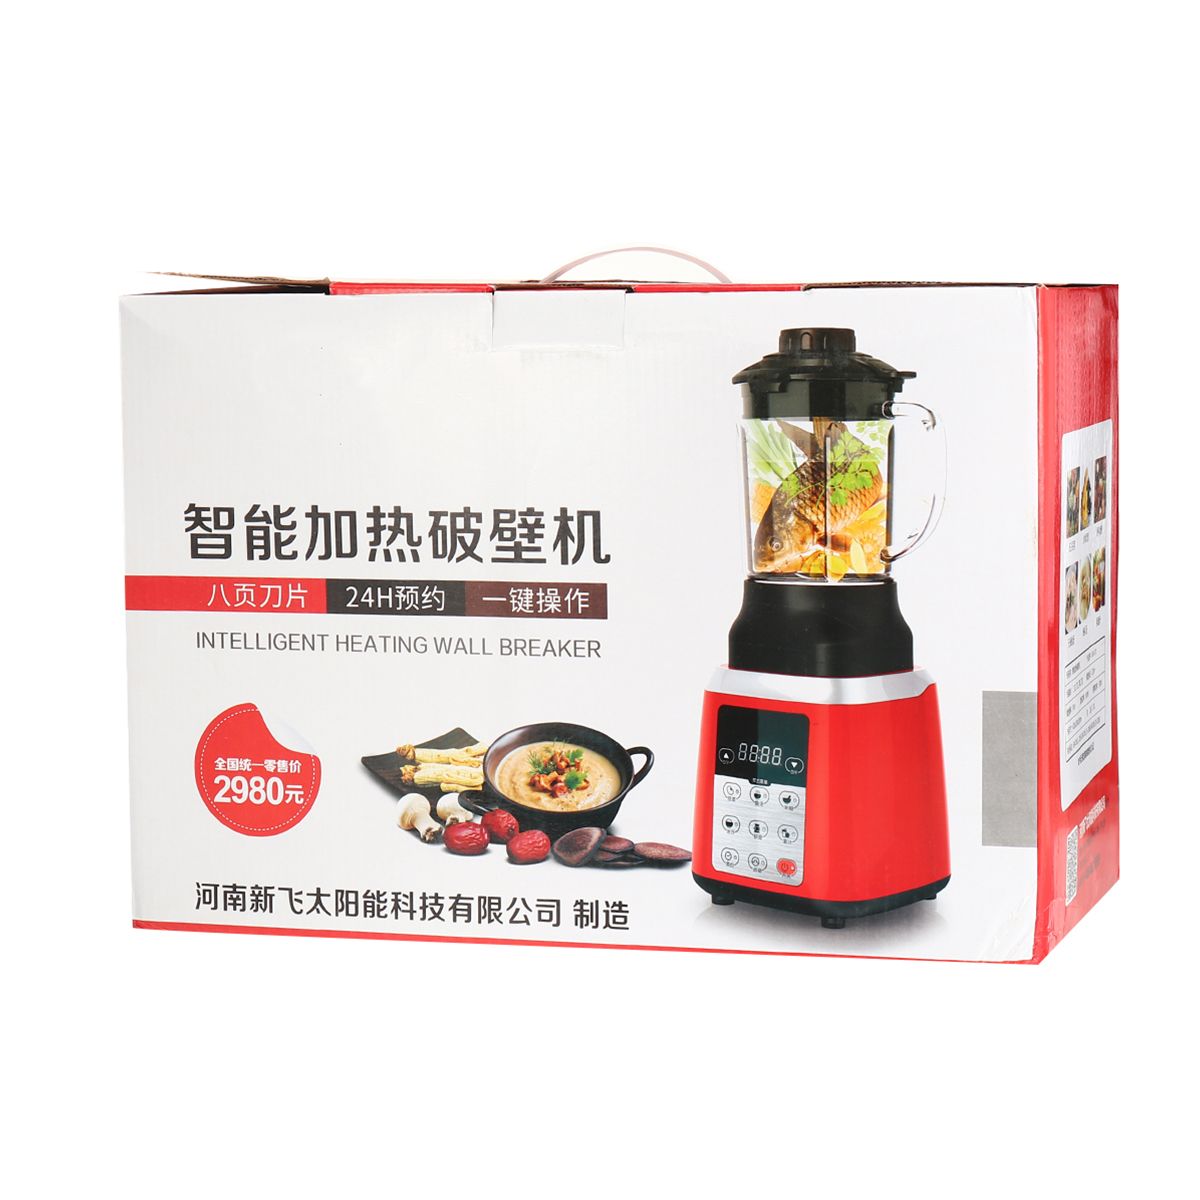 220V-1750ml-Electric-Auto-Heating-Blender-Adjustable-Speed-Food-Mixer-Juicer-Machine-1728417